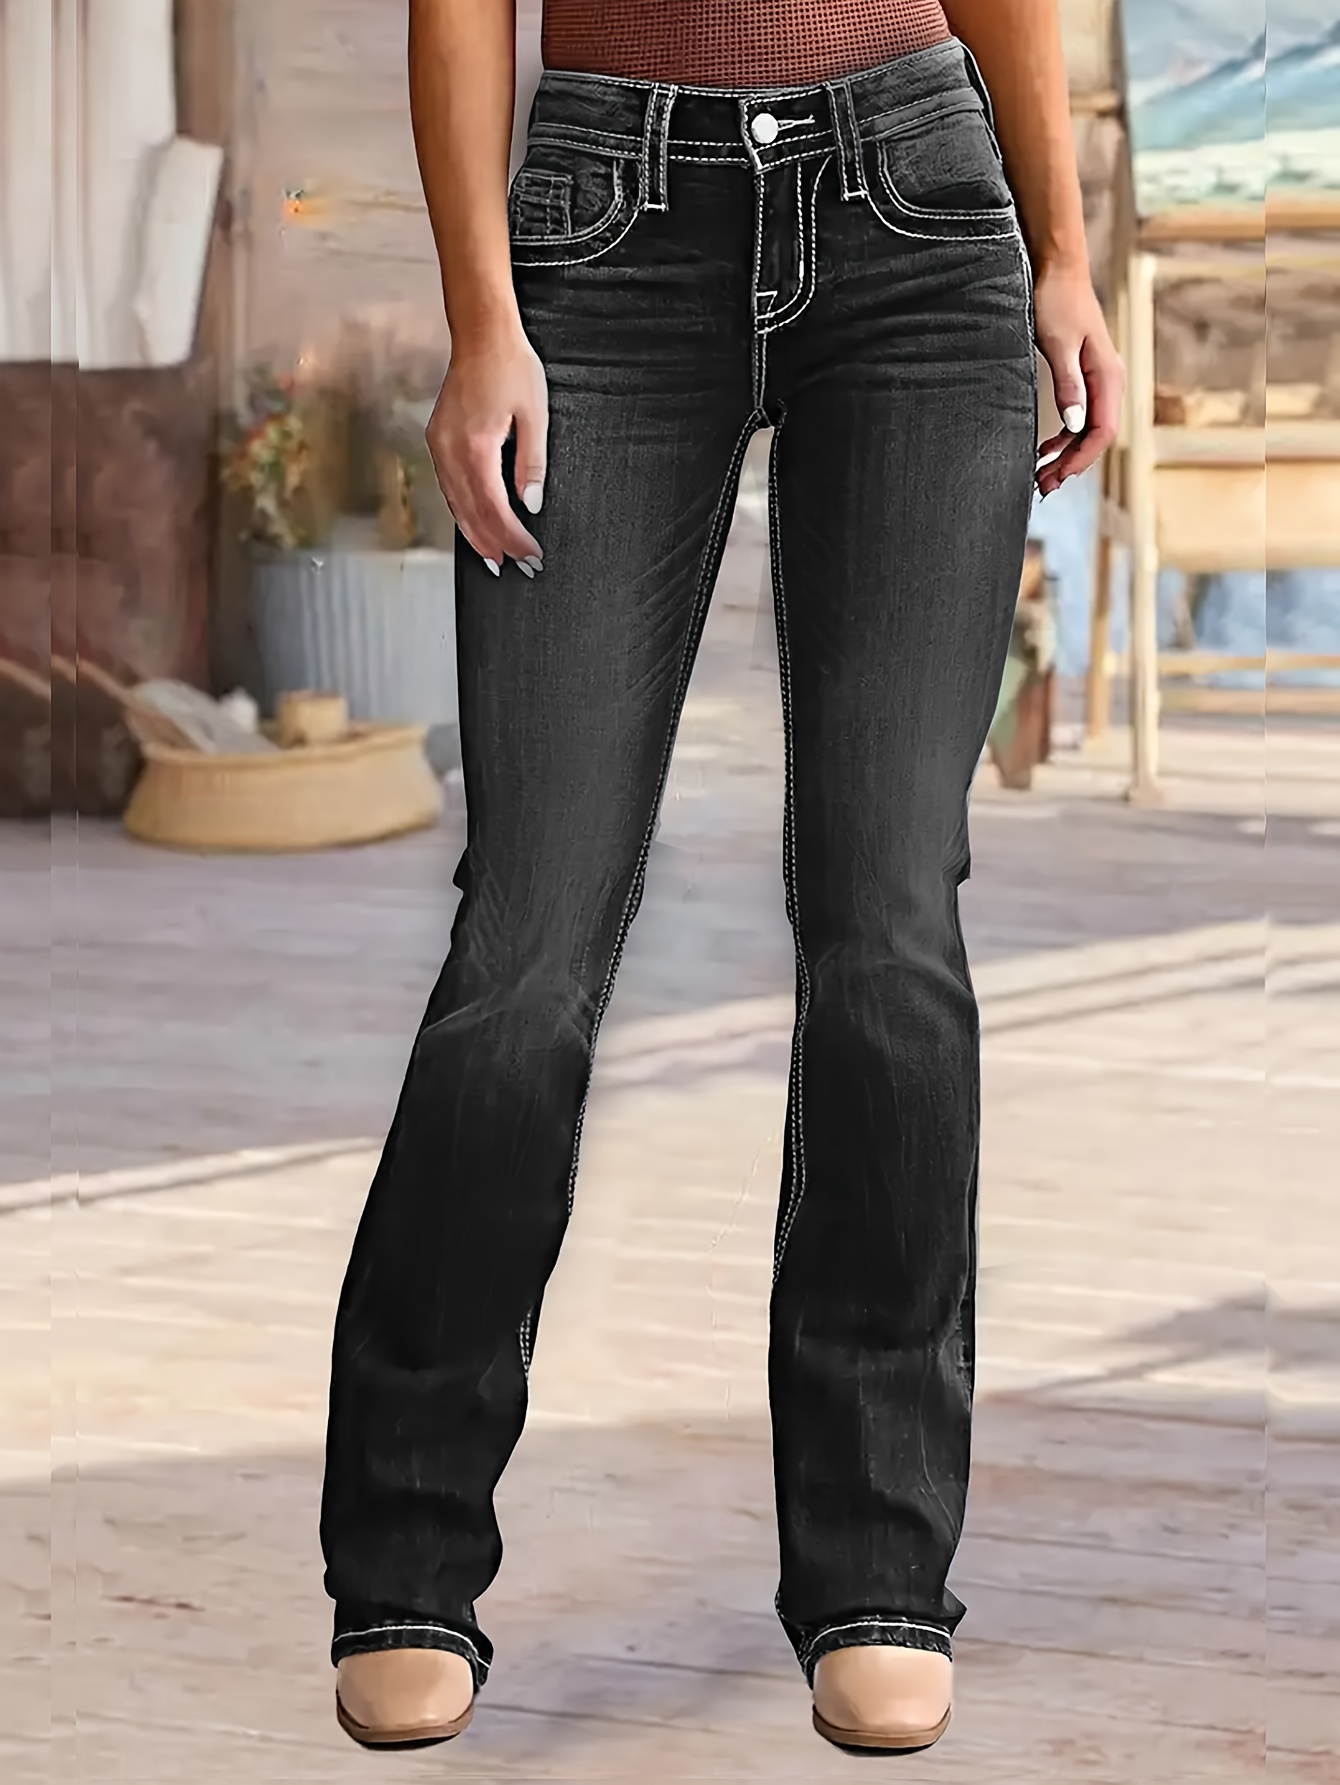 Women's boot cut Jeans low rise Black Bootcut pants Stretch